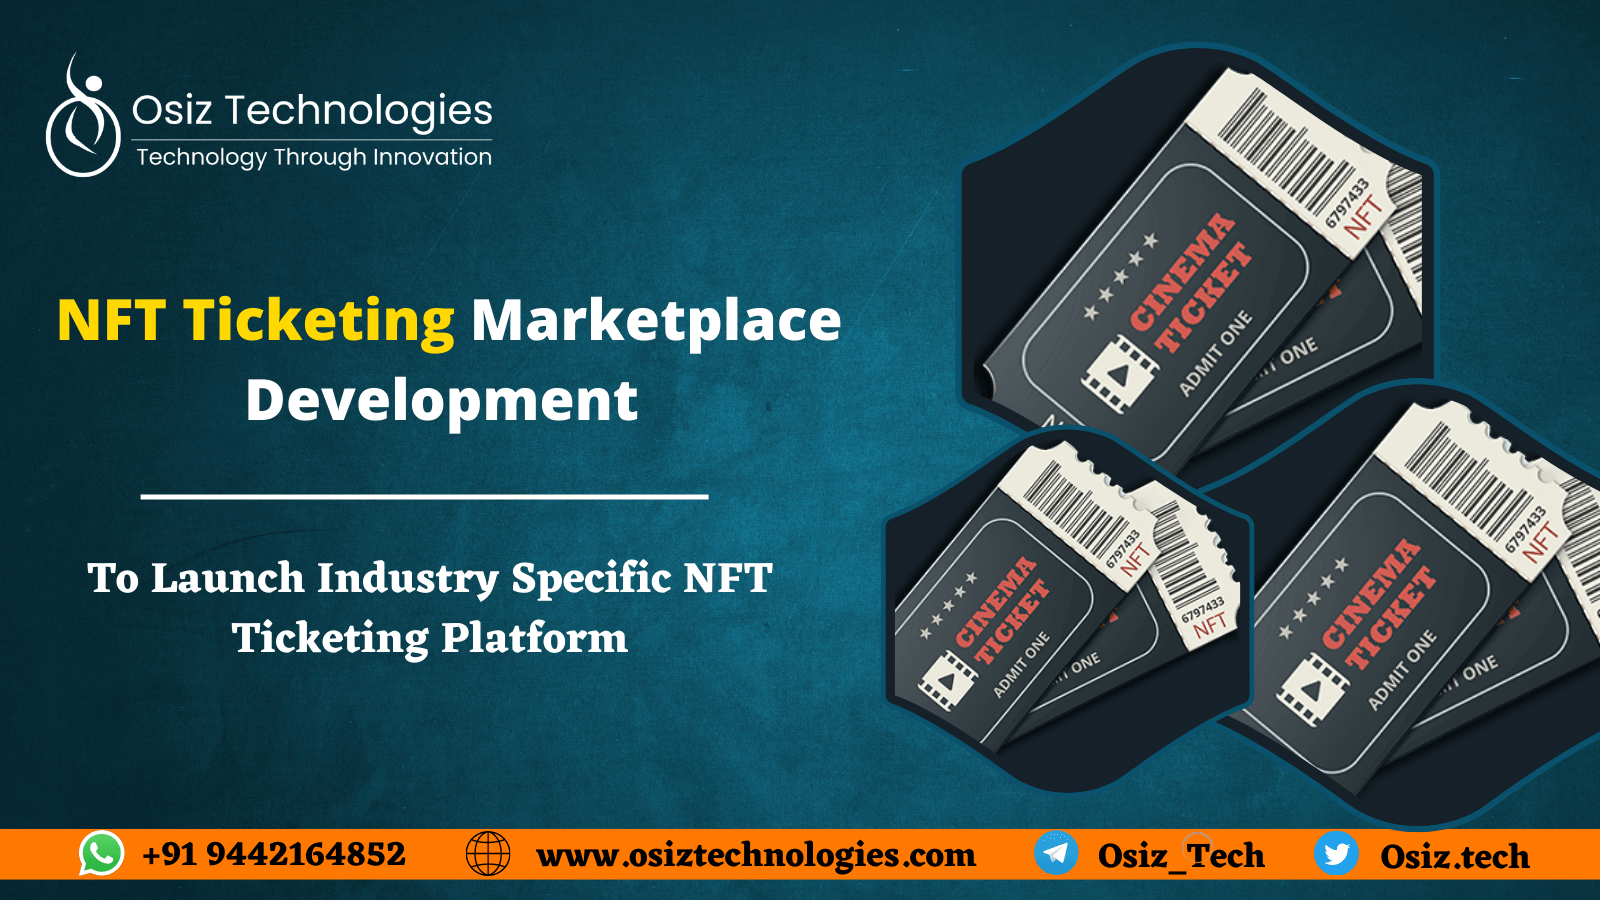 NFT Ticketing Marketplace Development Company - Osiz Technologies